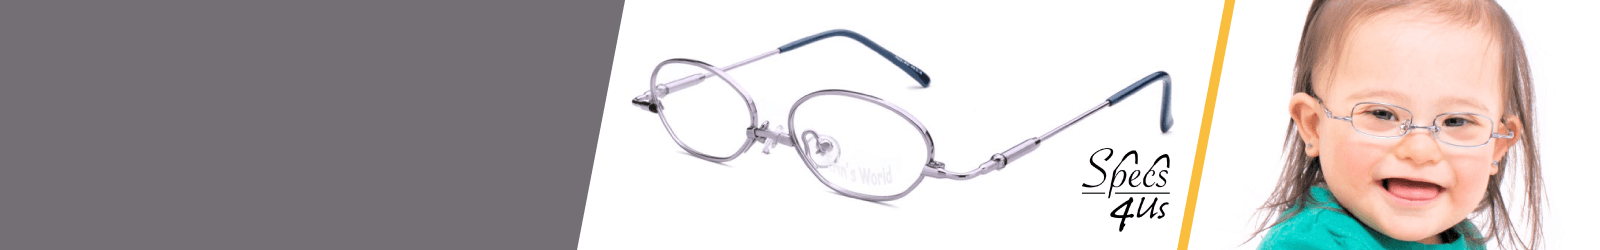 Aqua Specs4us Eyewear for Kids